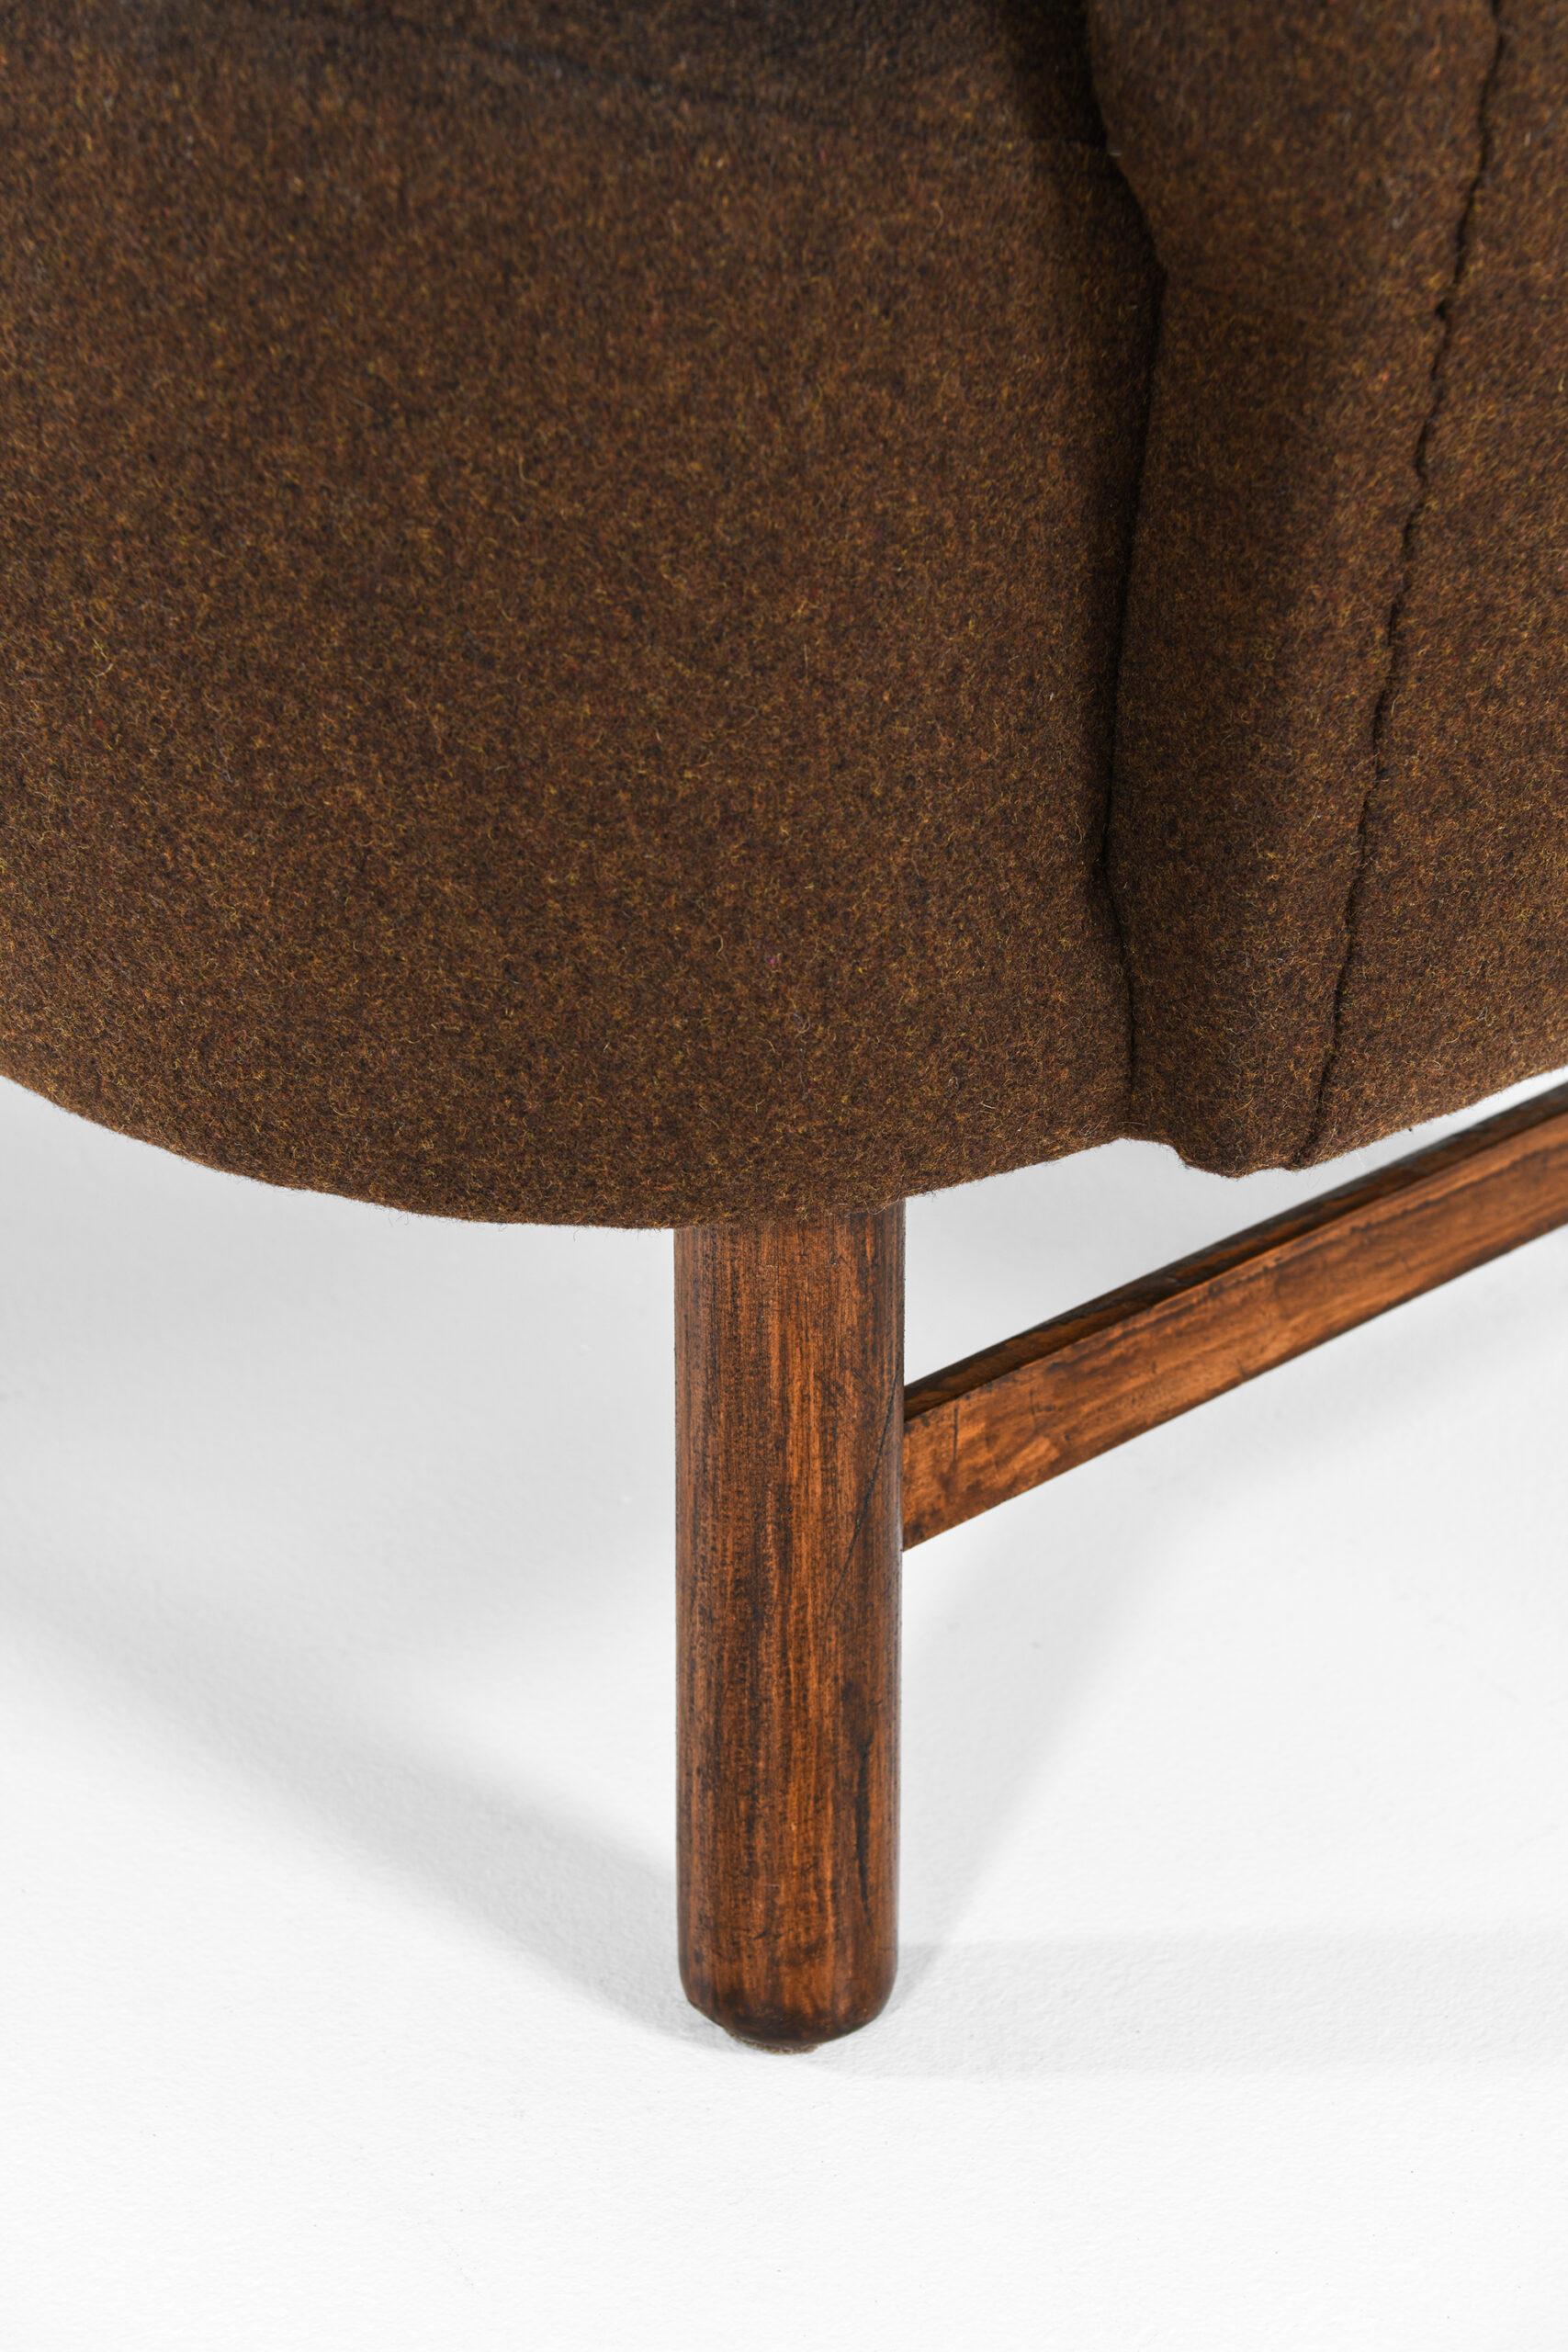 Scandinavian Modern Sofa Attributed to Tove & Edvard Kindt-Larsen Produced in Denmark